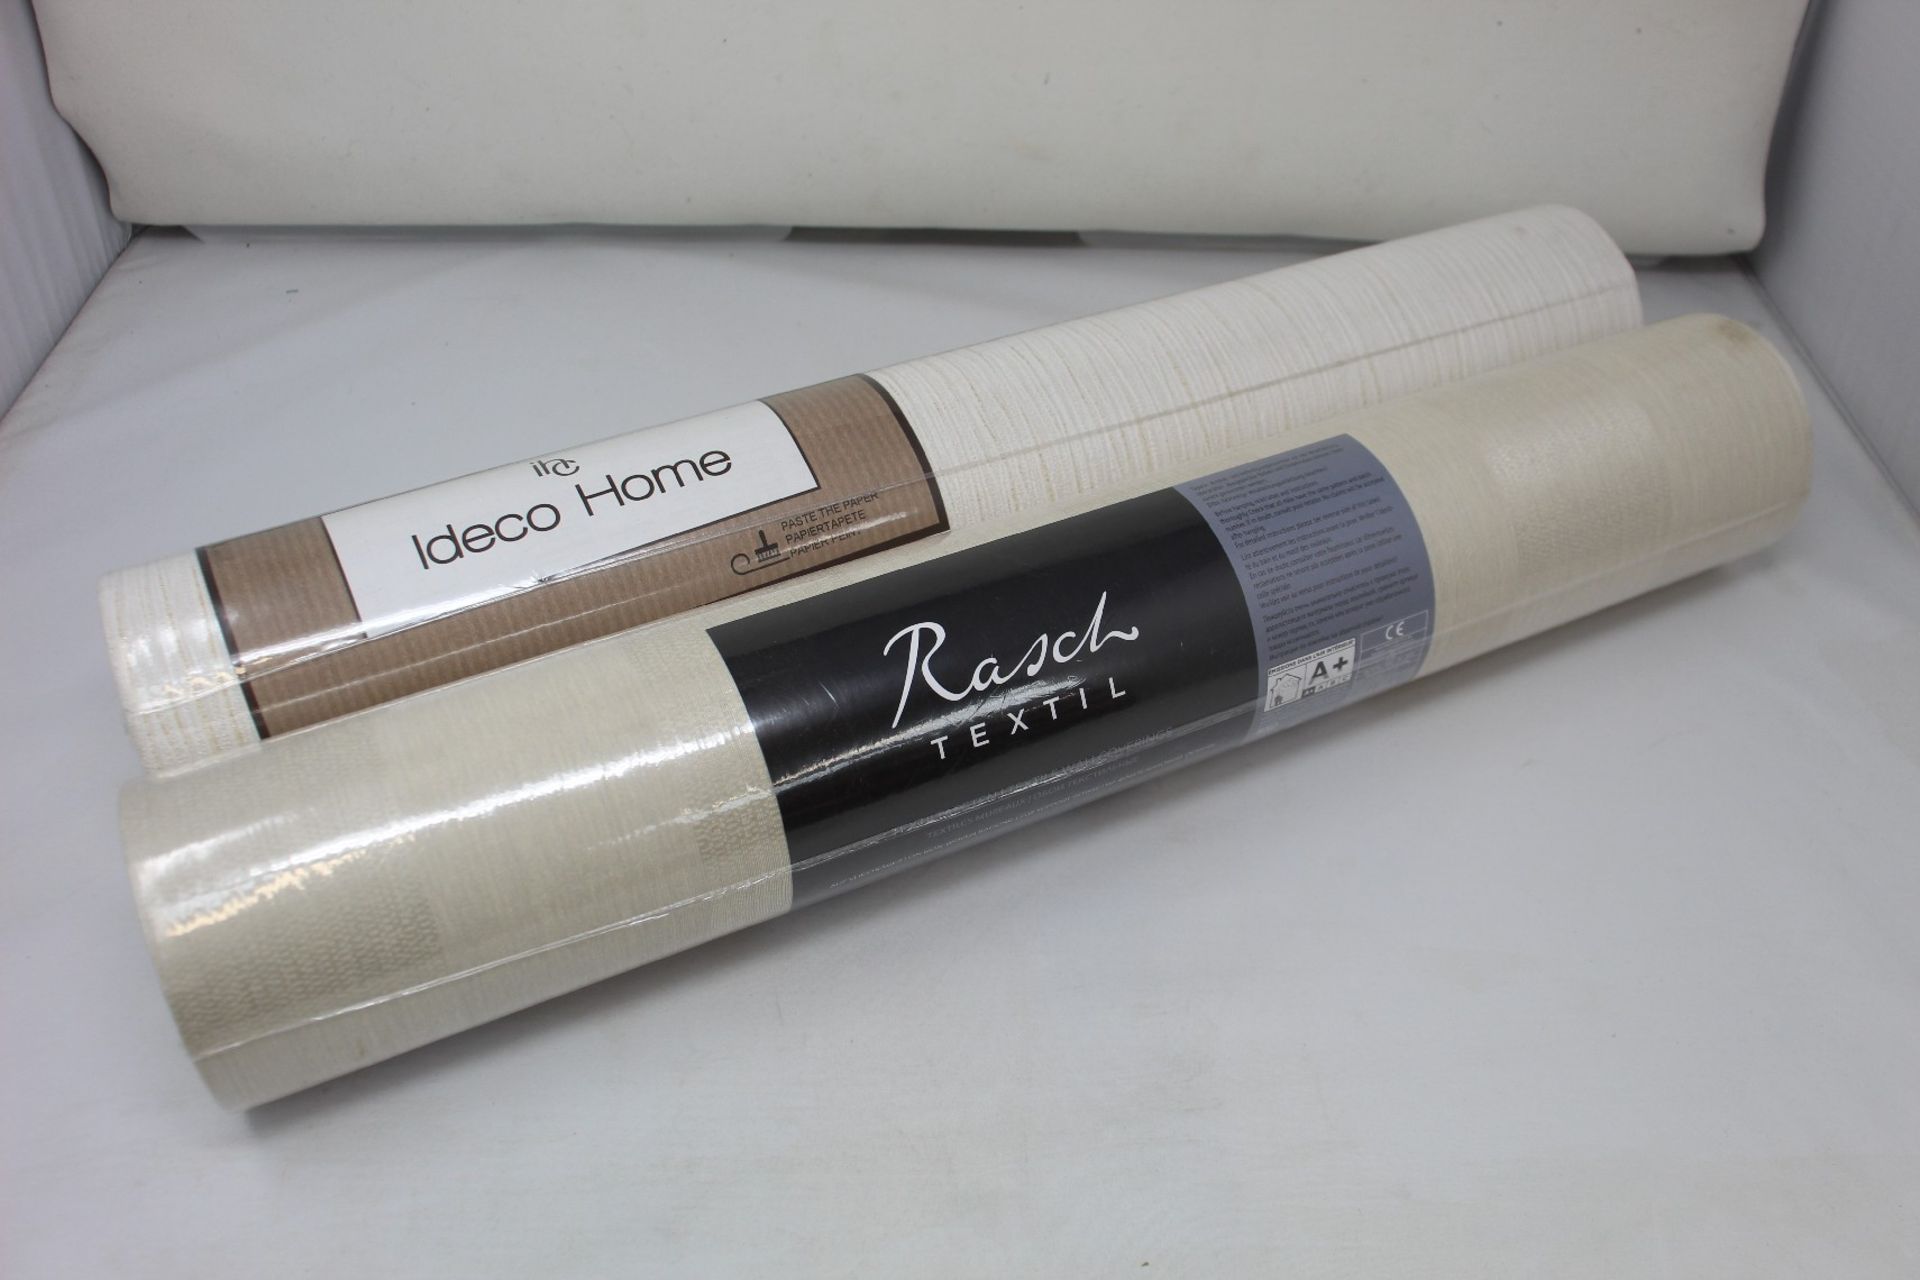 Sixteen rolls of Rasch Textile wallpaper (Styles 085579 and 085661).